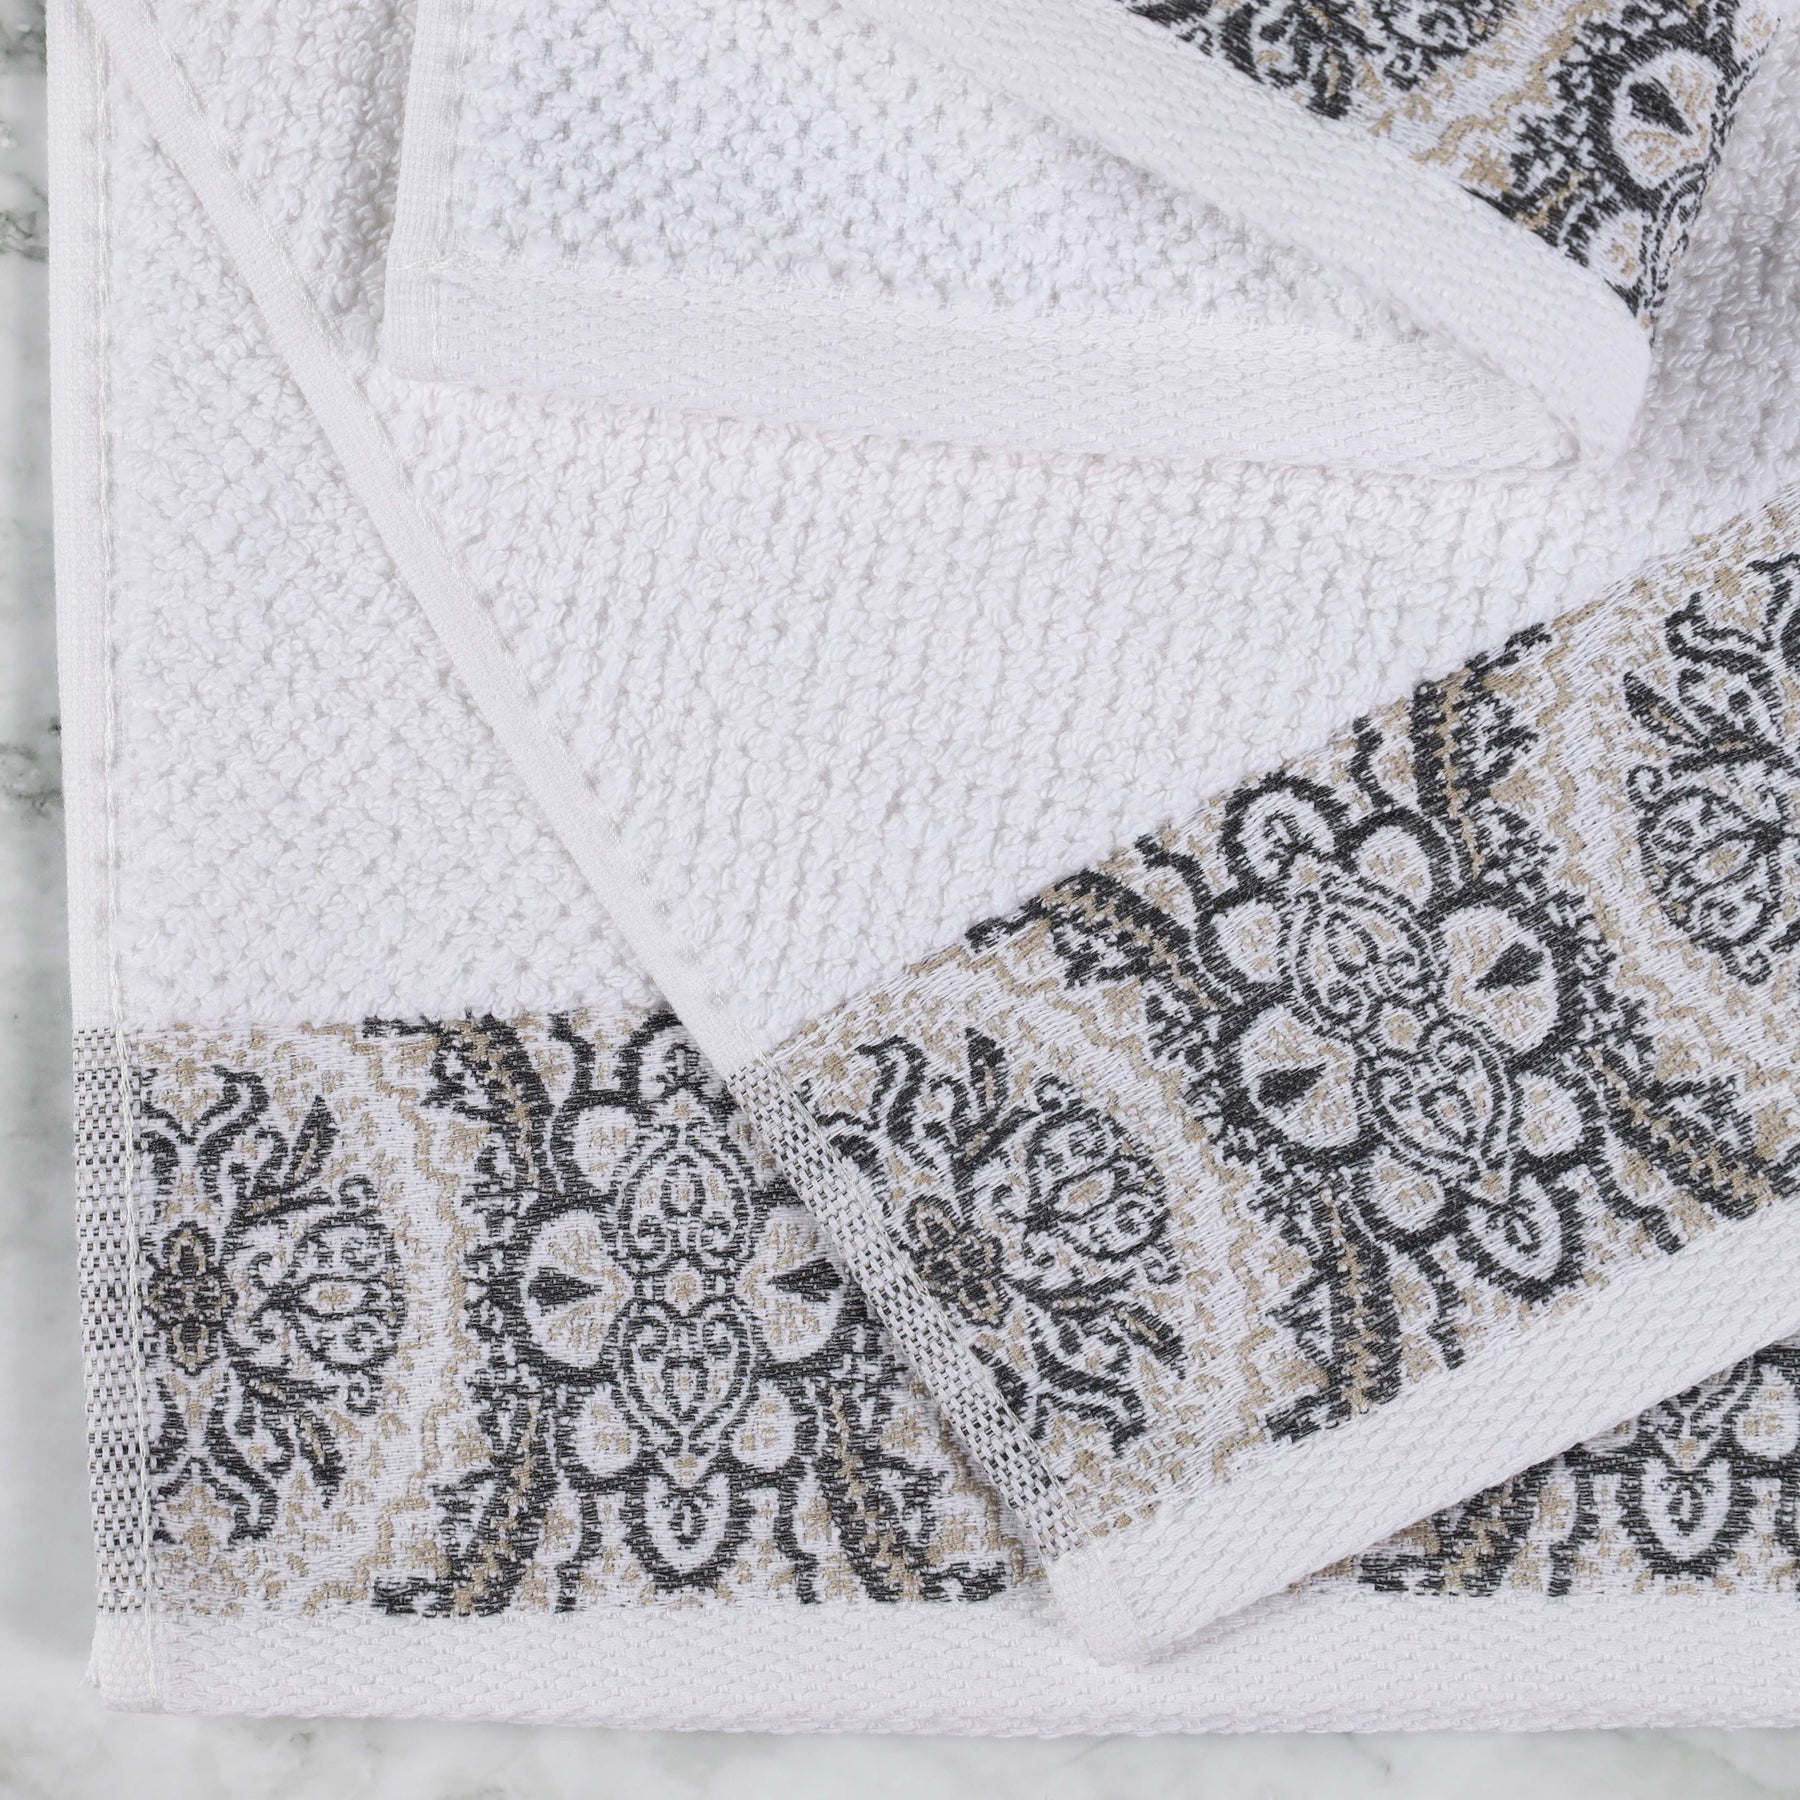 Medallion Cotton Jacquard Textured Soft Absorbent Hand Towel Set of 6